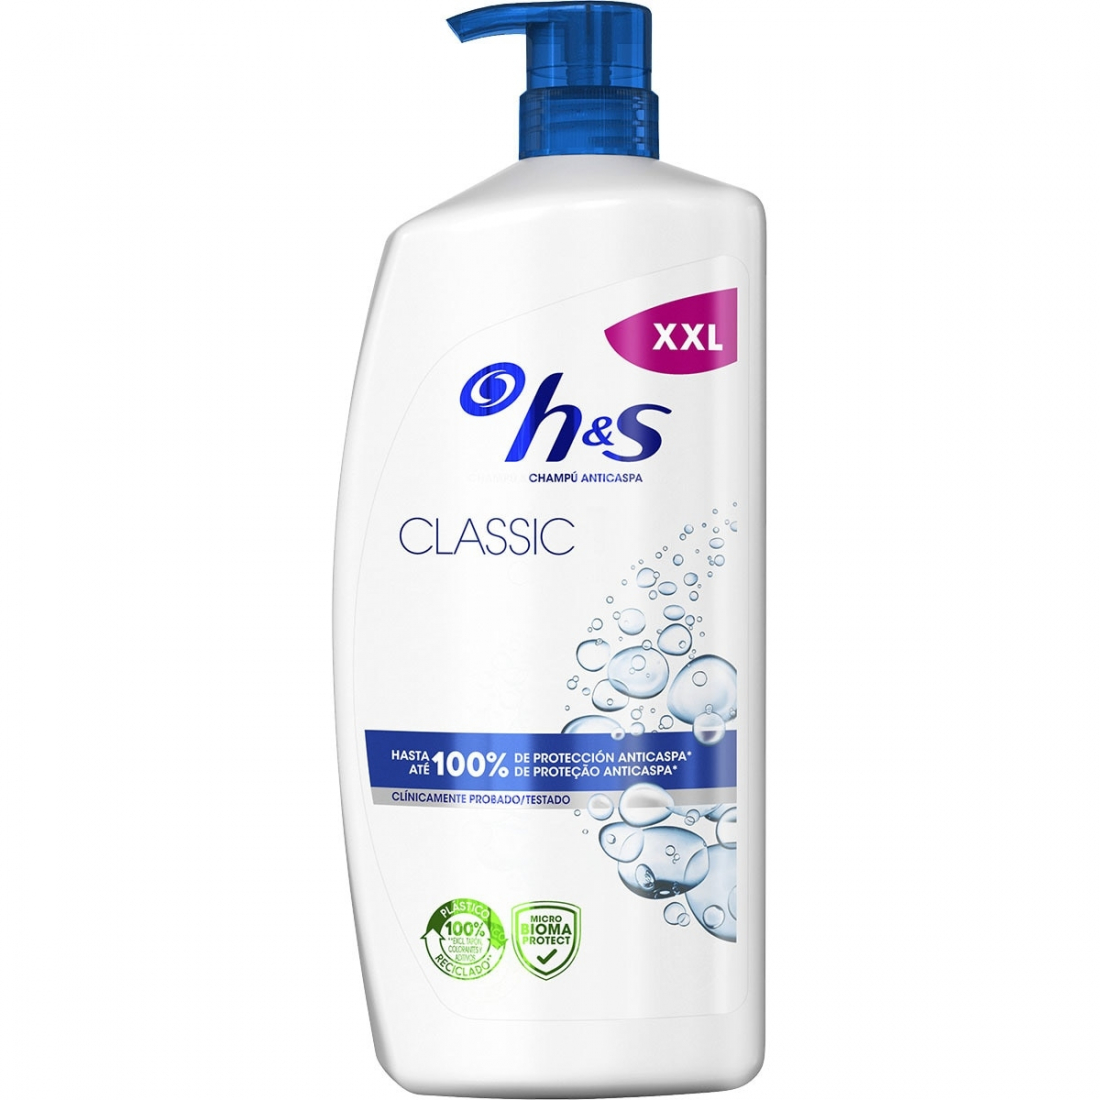 'Classic' Dandruff Shampoo - 1 L